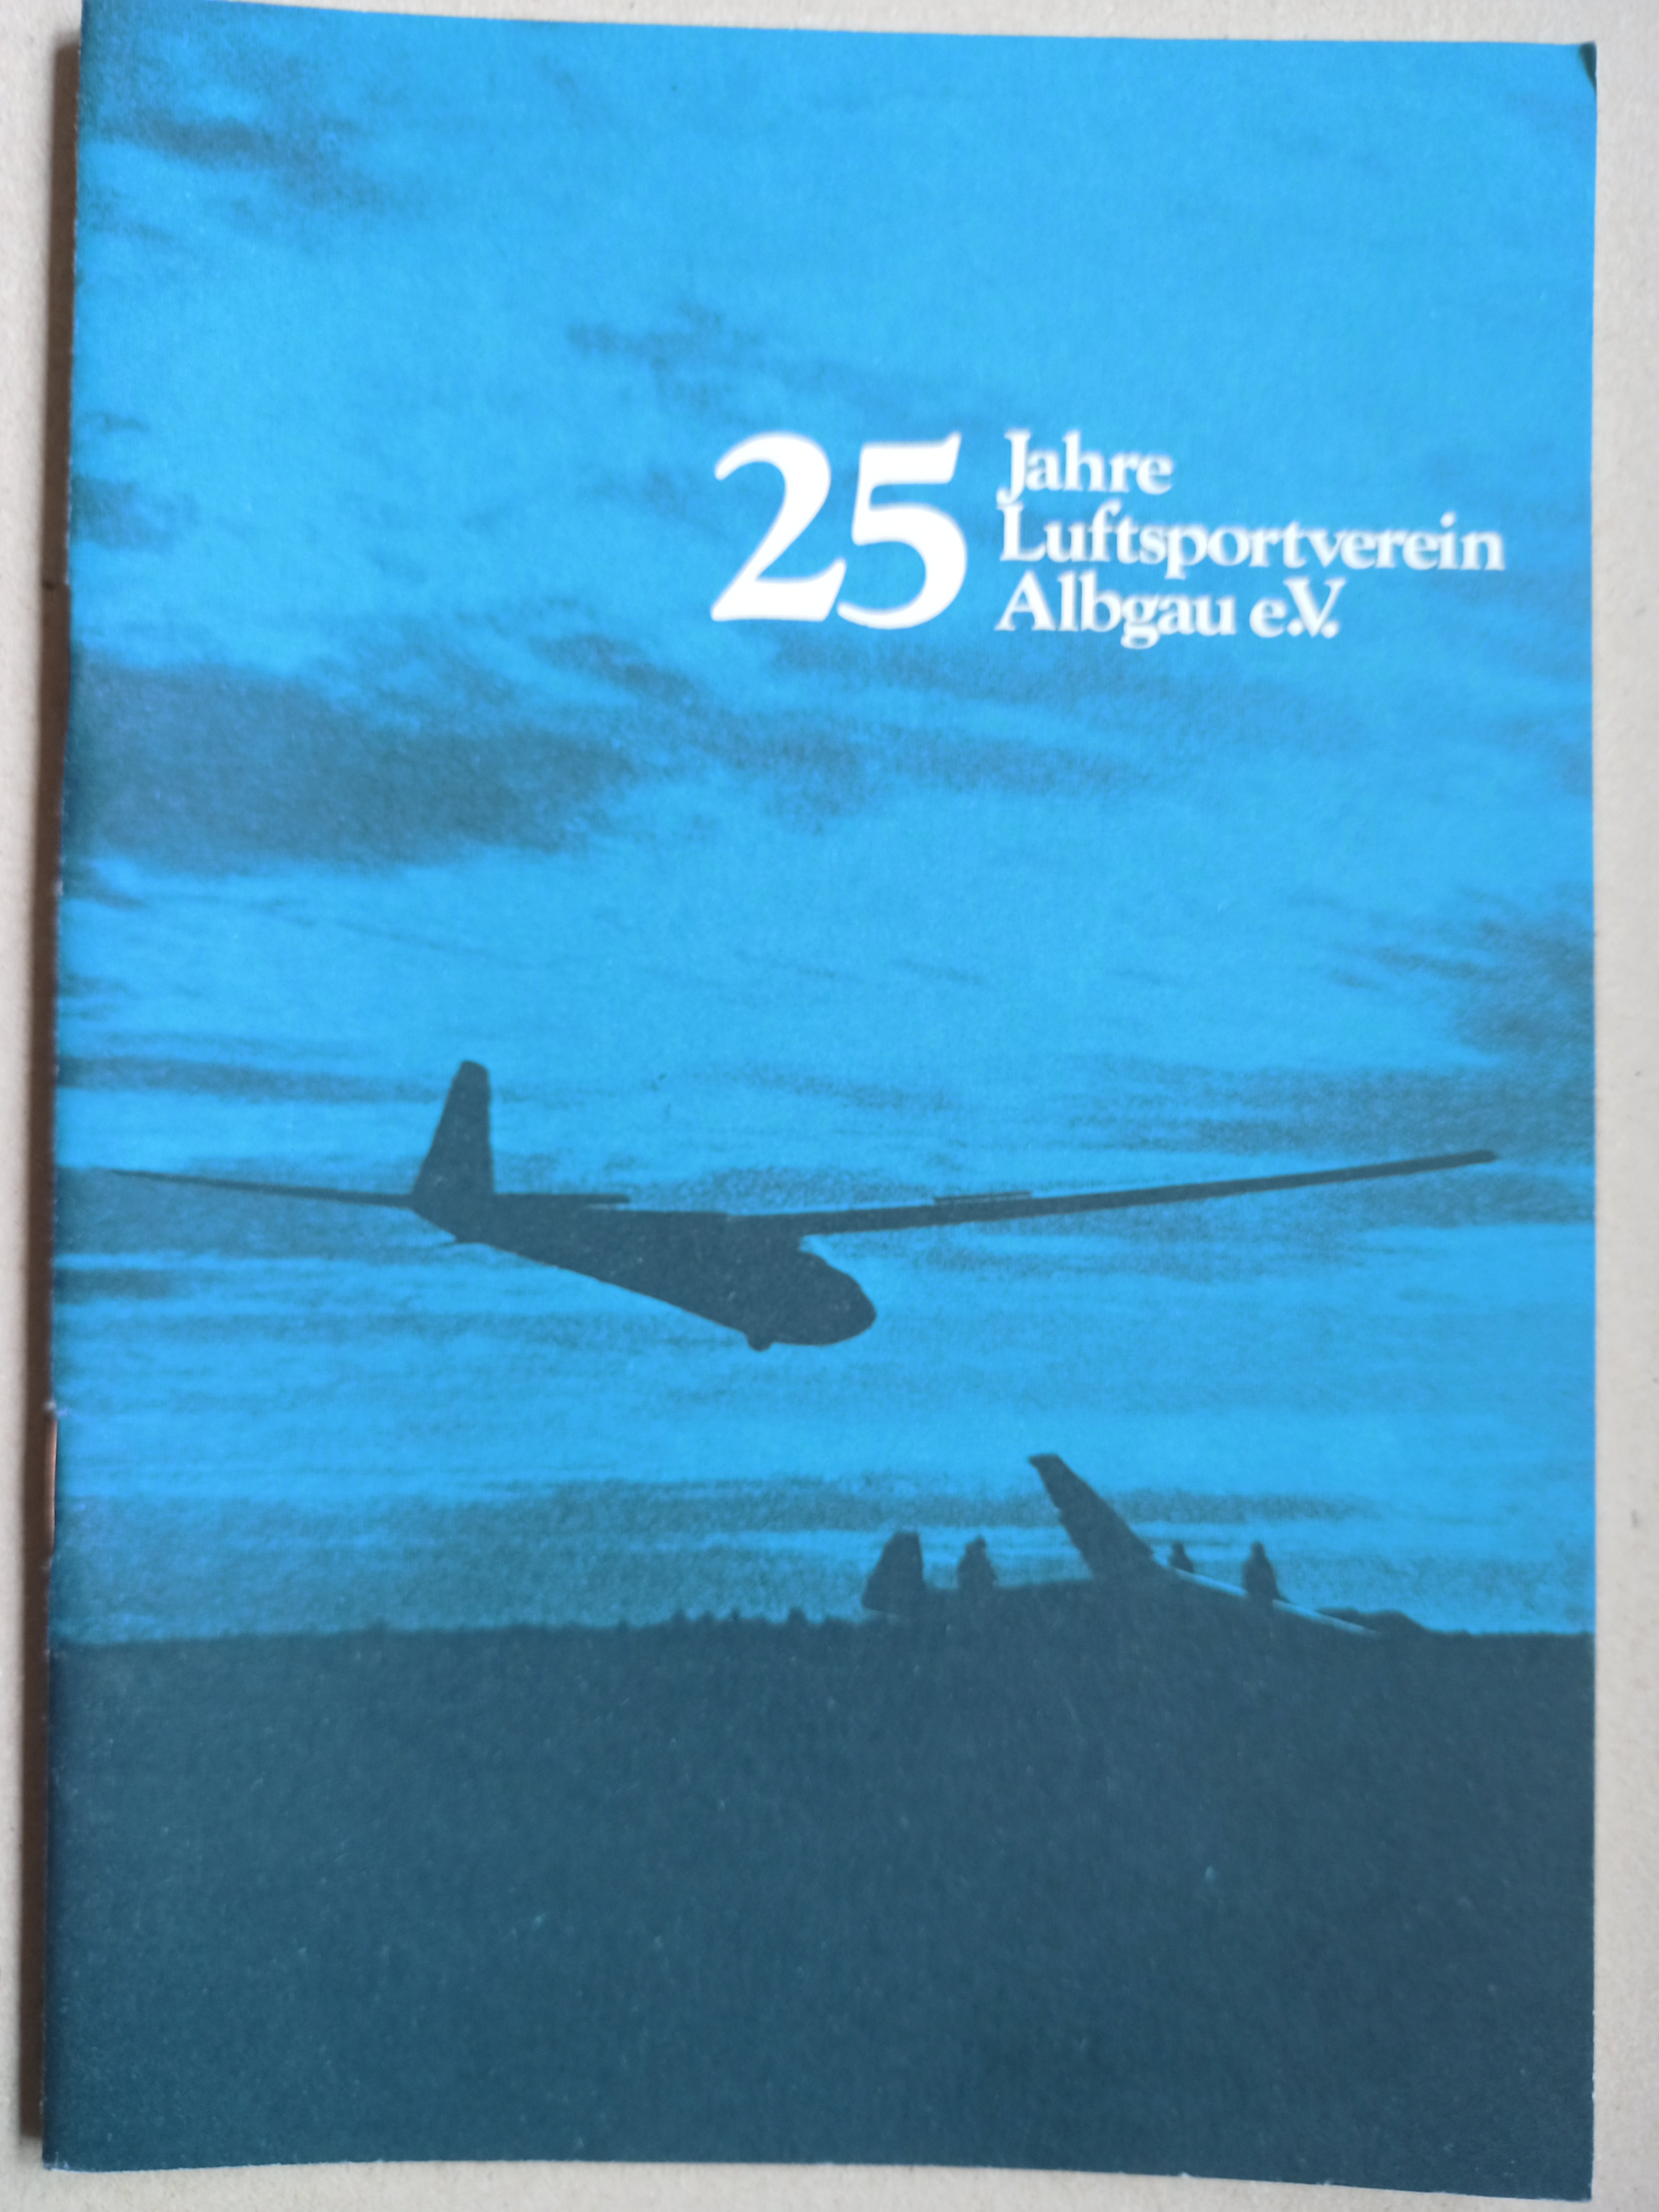 Albgau 25 Jahre (Deutsches Segelflugmuseum mit Modellflug CC BY-NC-SA)